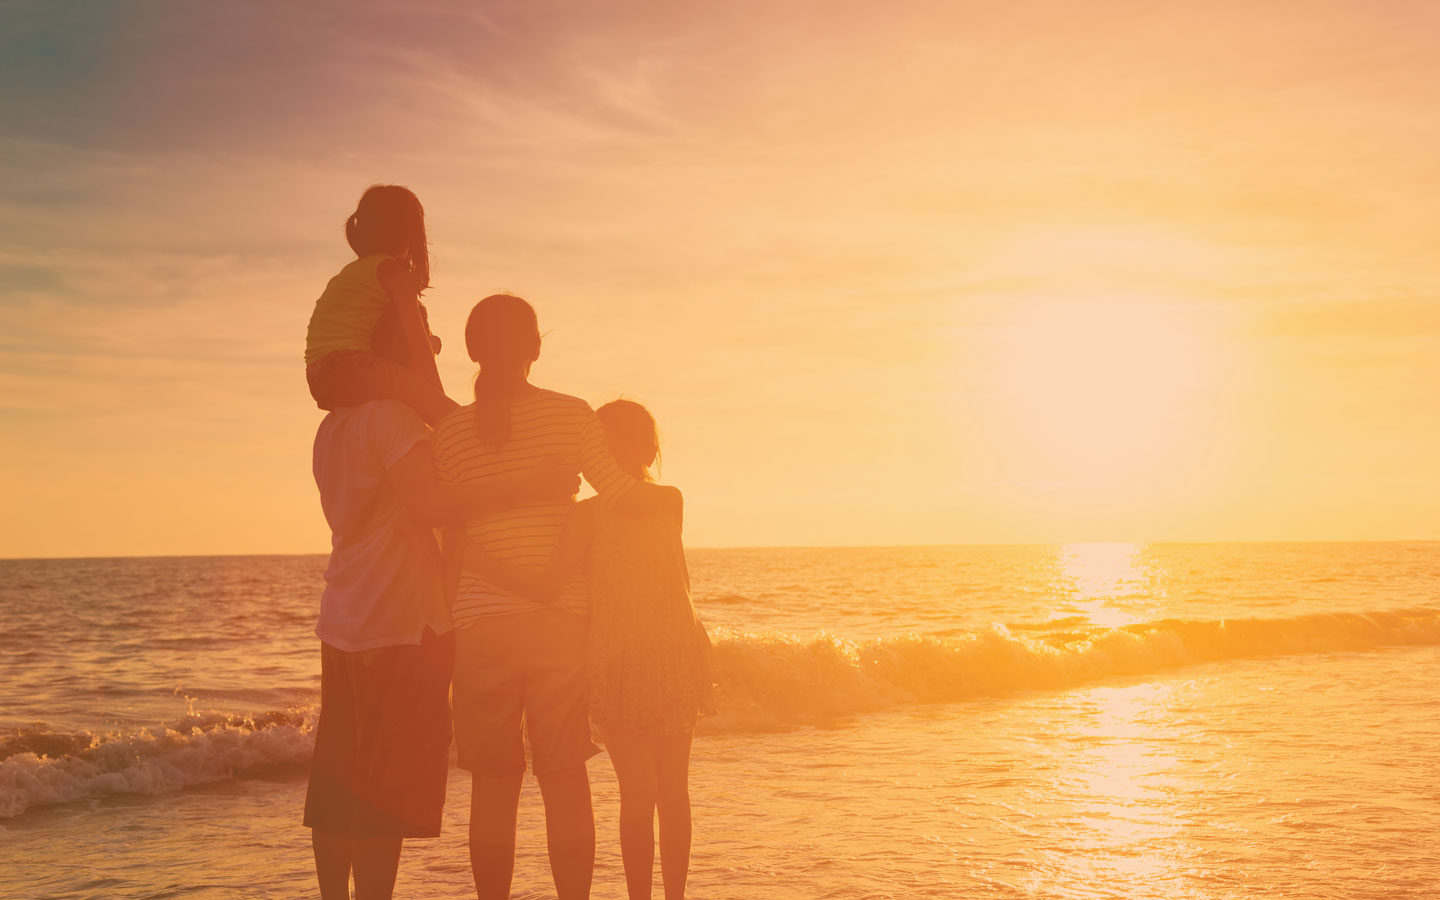 Family on a beach, enjoying the sunset